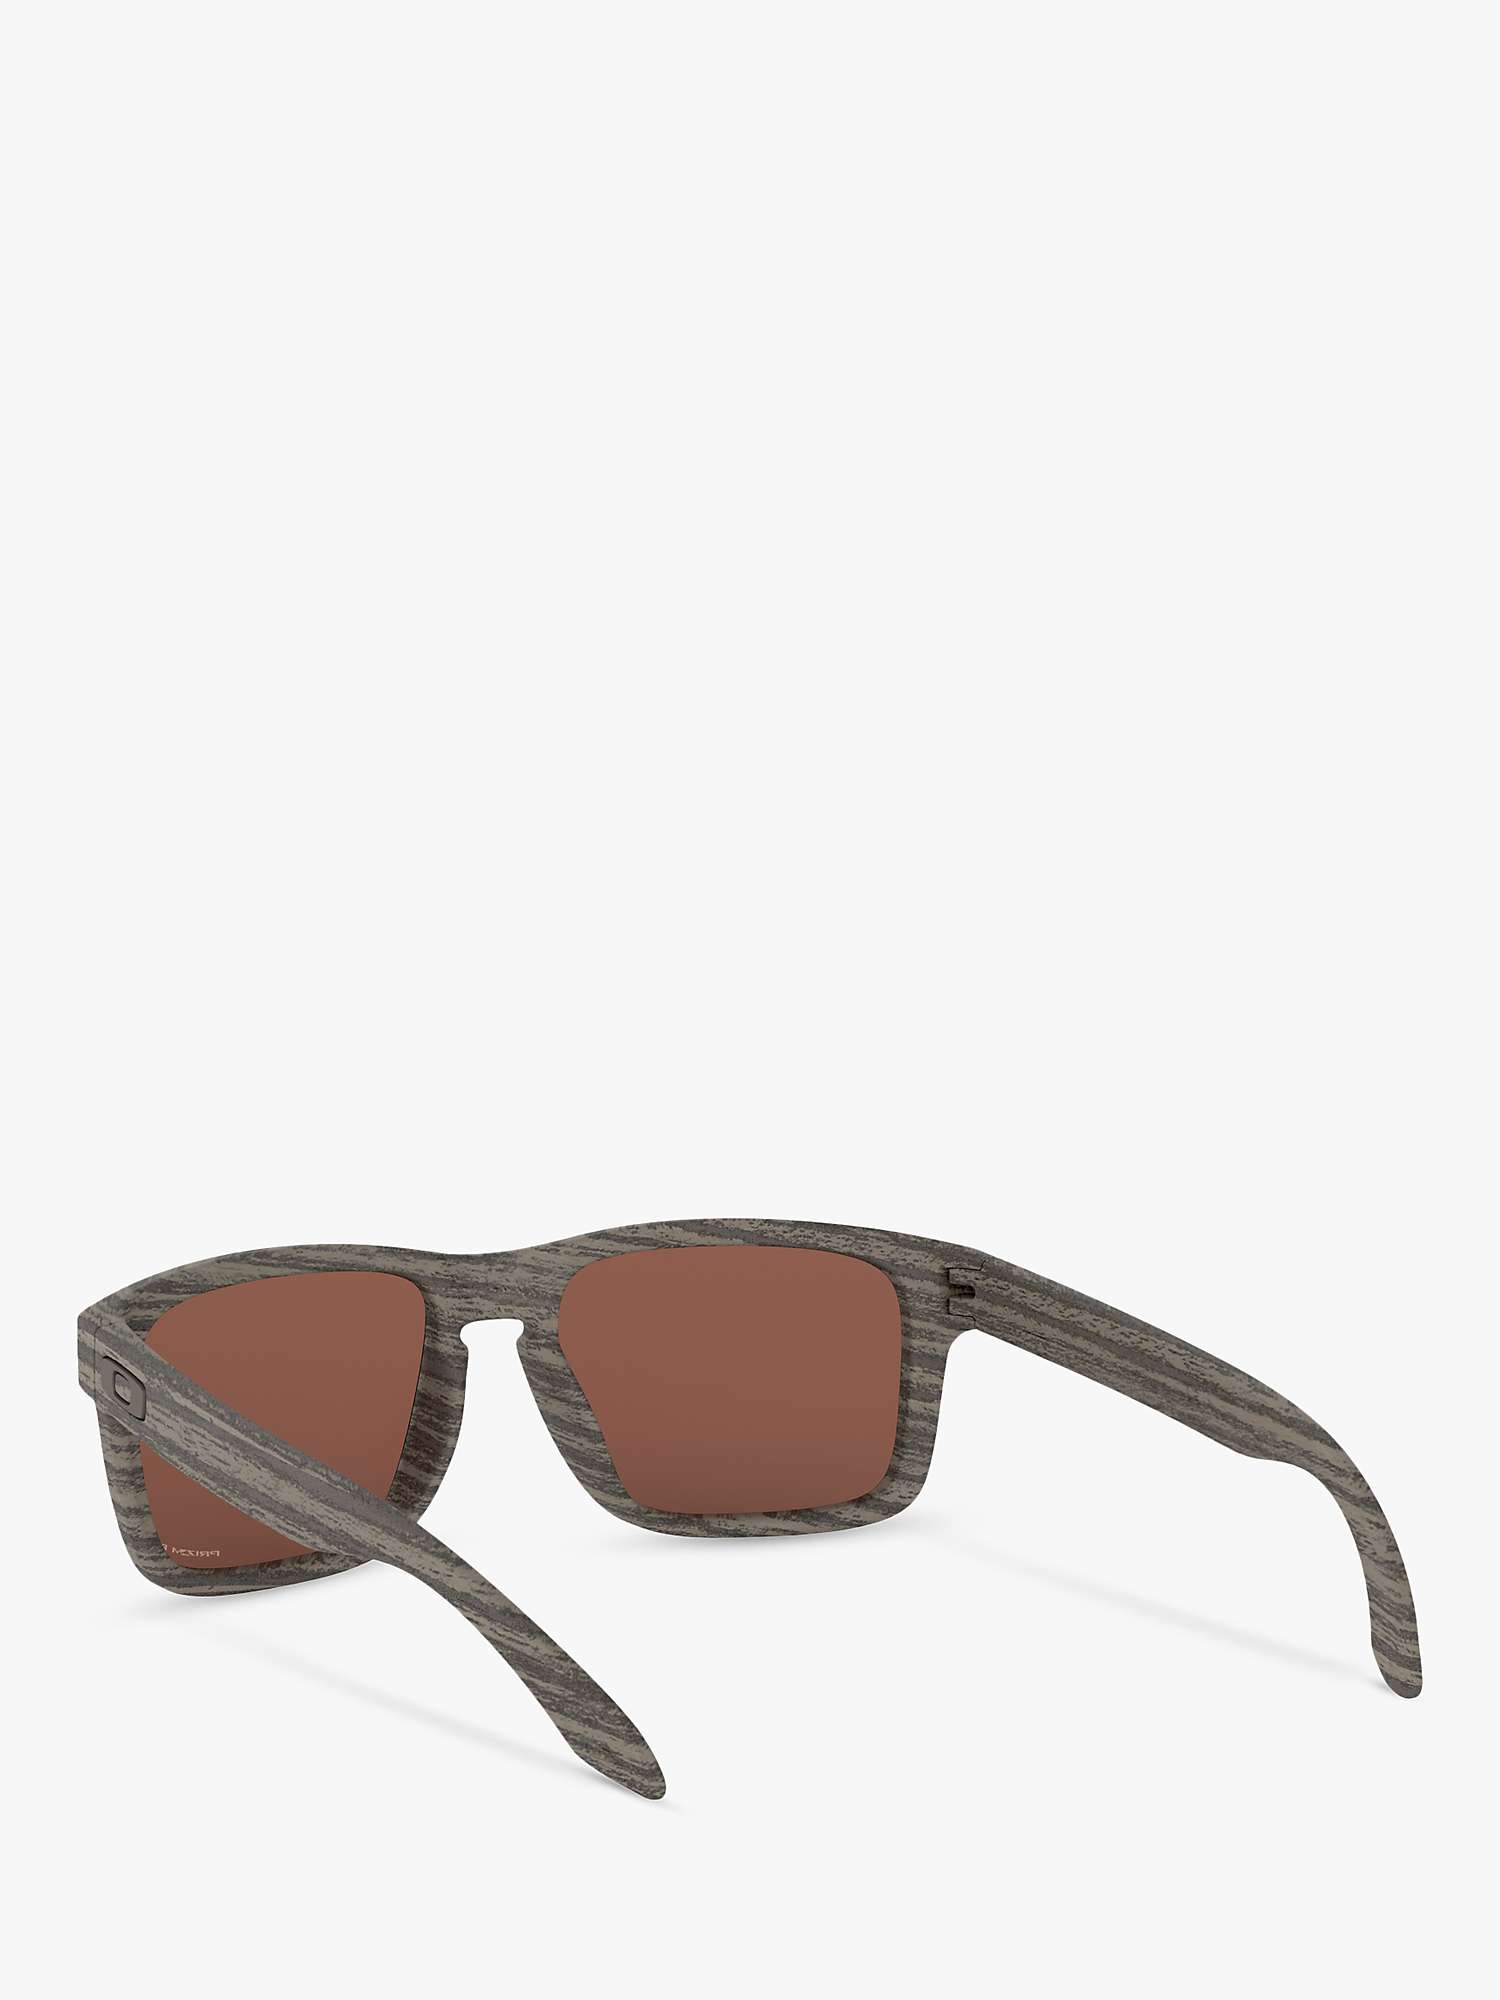 Buy Oakley OO9102 Men's Holbrook Prizm Polarised Square Sunglasses Online at johnlewis.com